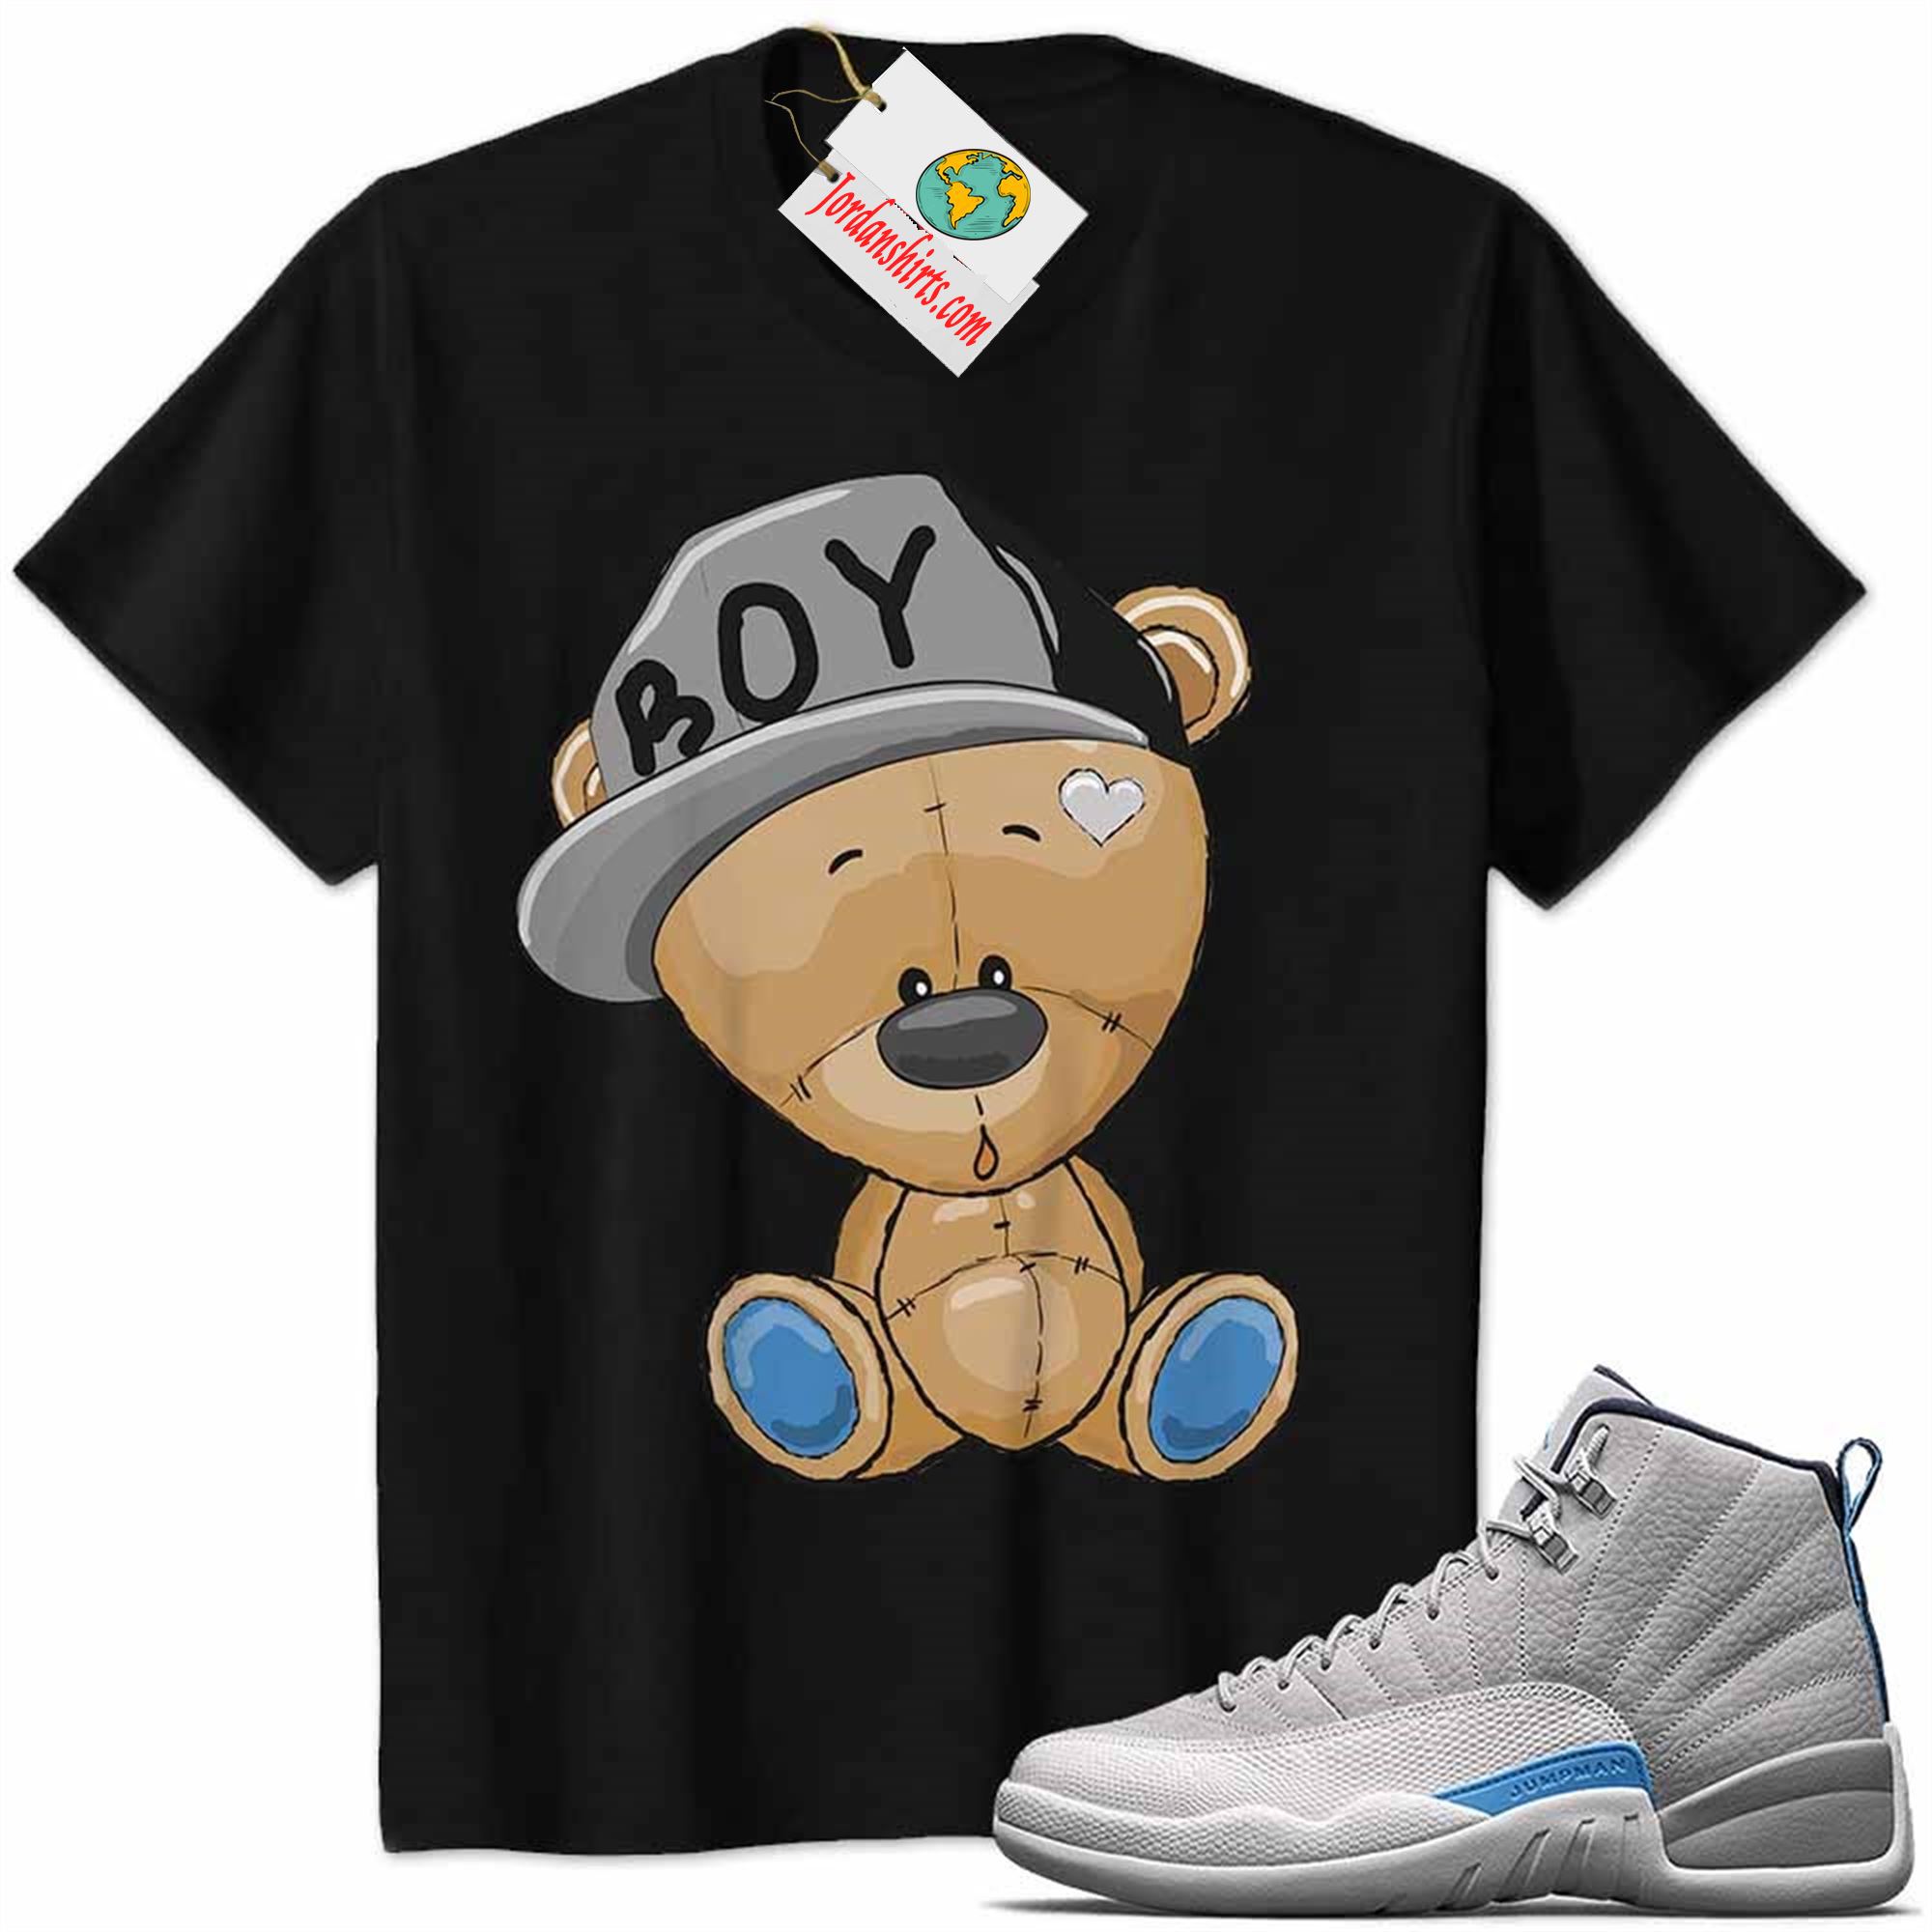 Jordan 12 Shirt, Jordan 12 Wolf Grey Shirt Cute Baby Teddy Bear Black Full Size Up To 5xl